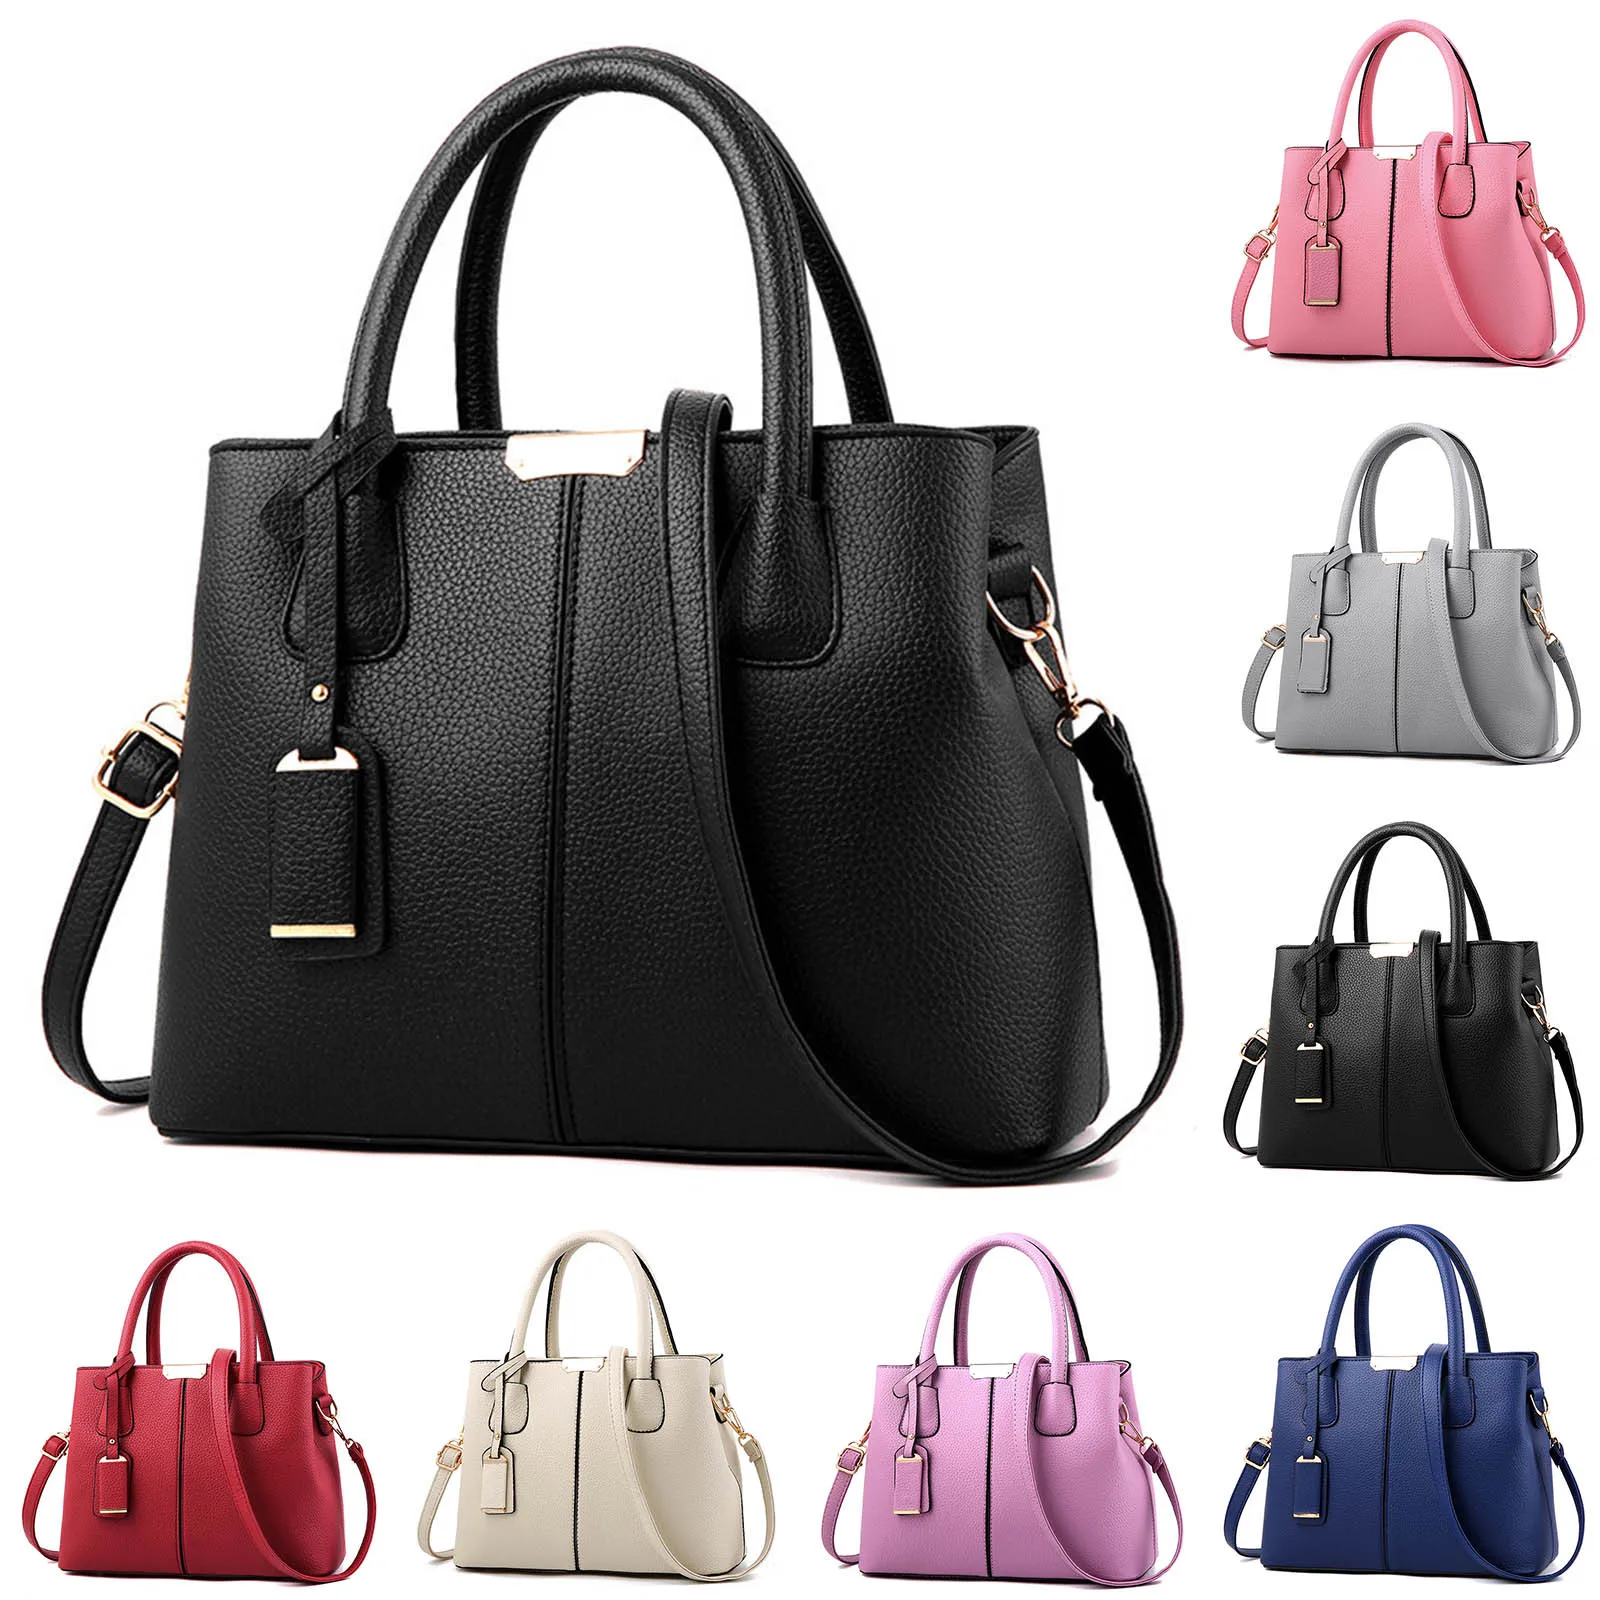 Roomy Womens Handbags Purse Satchel Shoulder Bags Tote Leather Bag